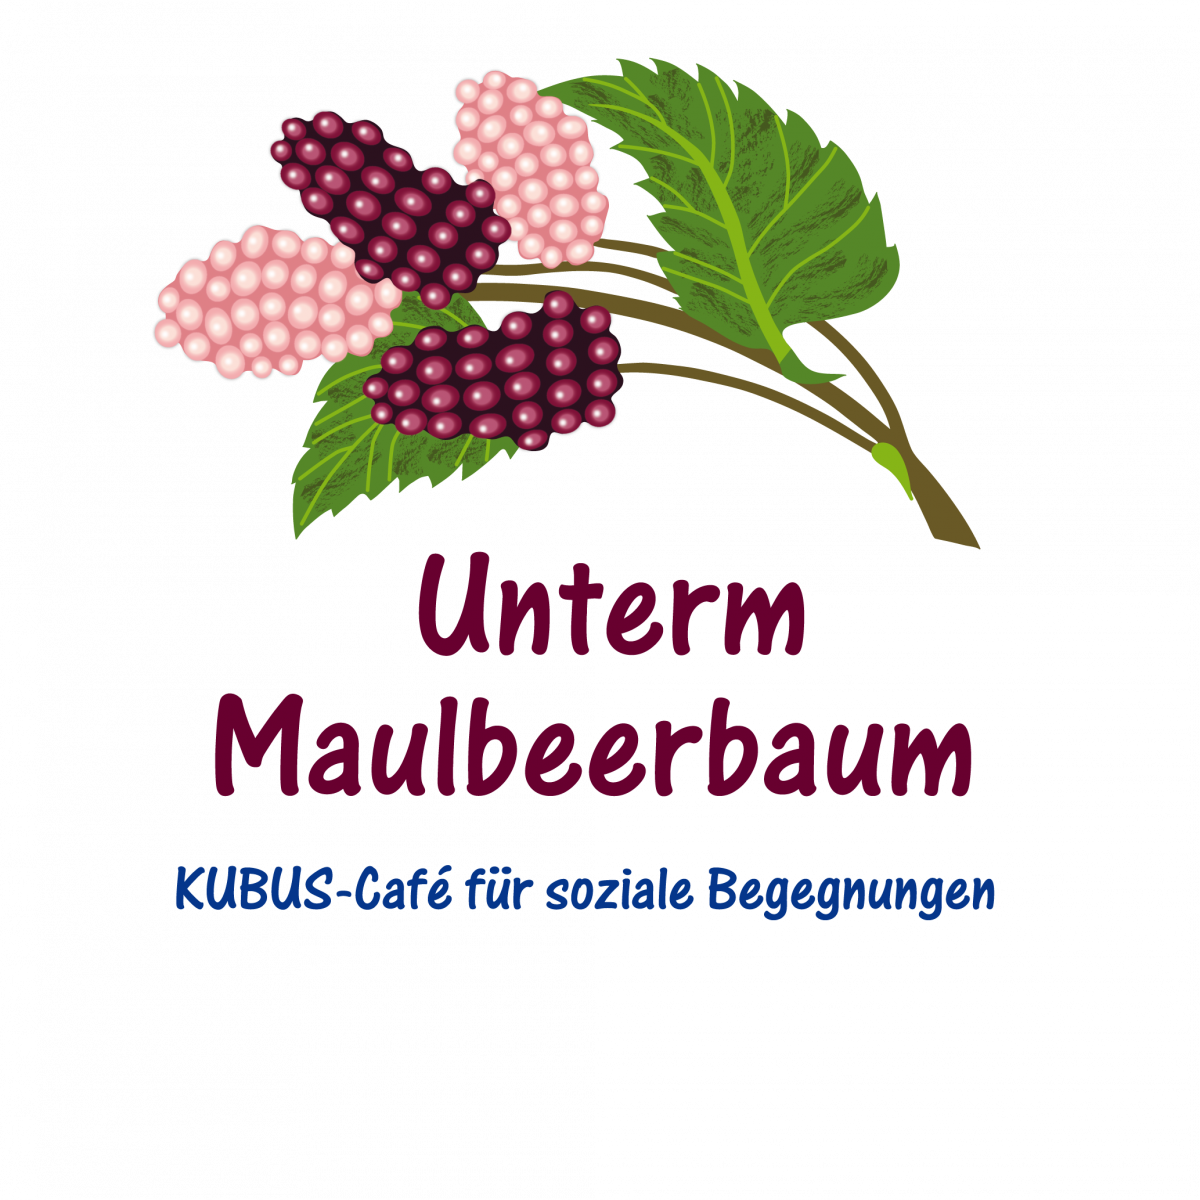 A3 Unterm Maulbeebaum4